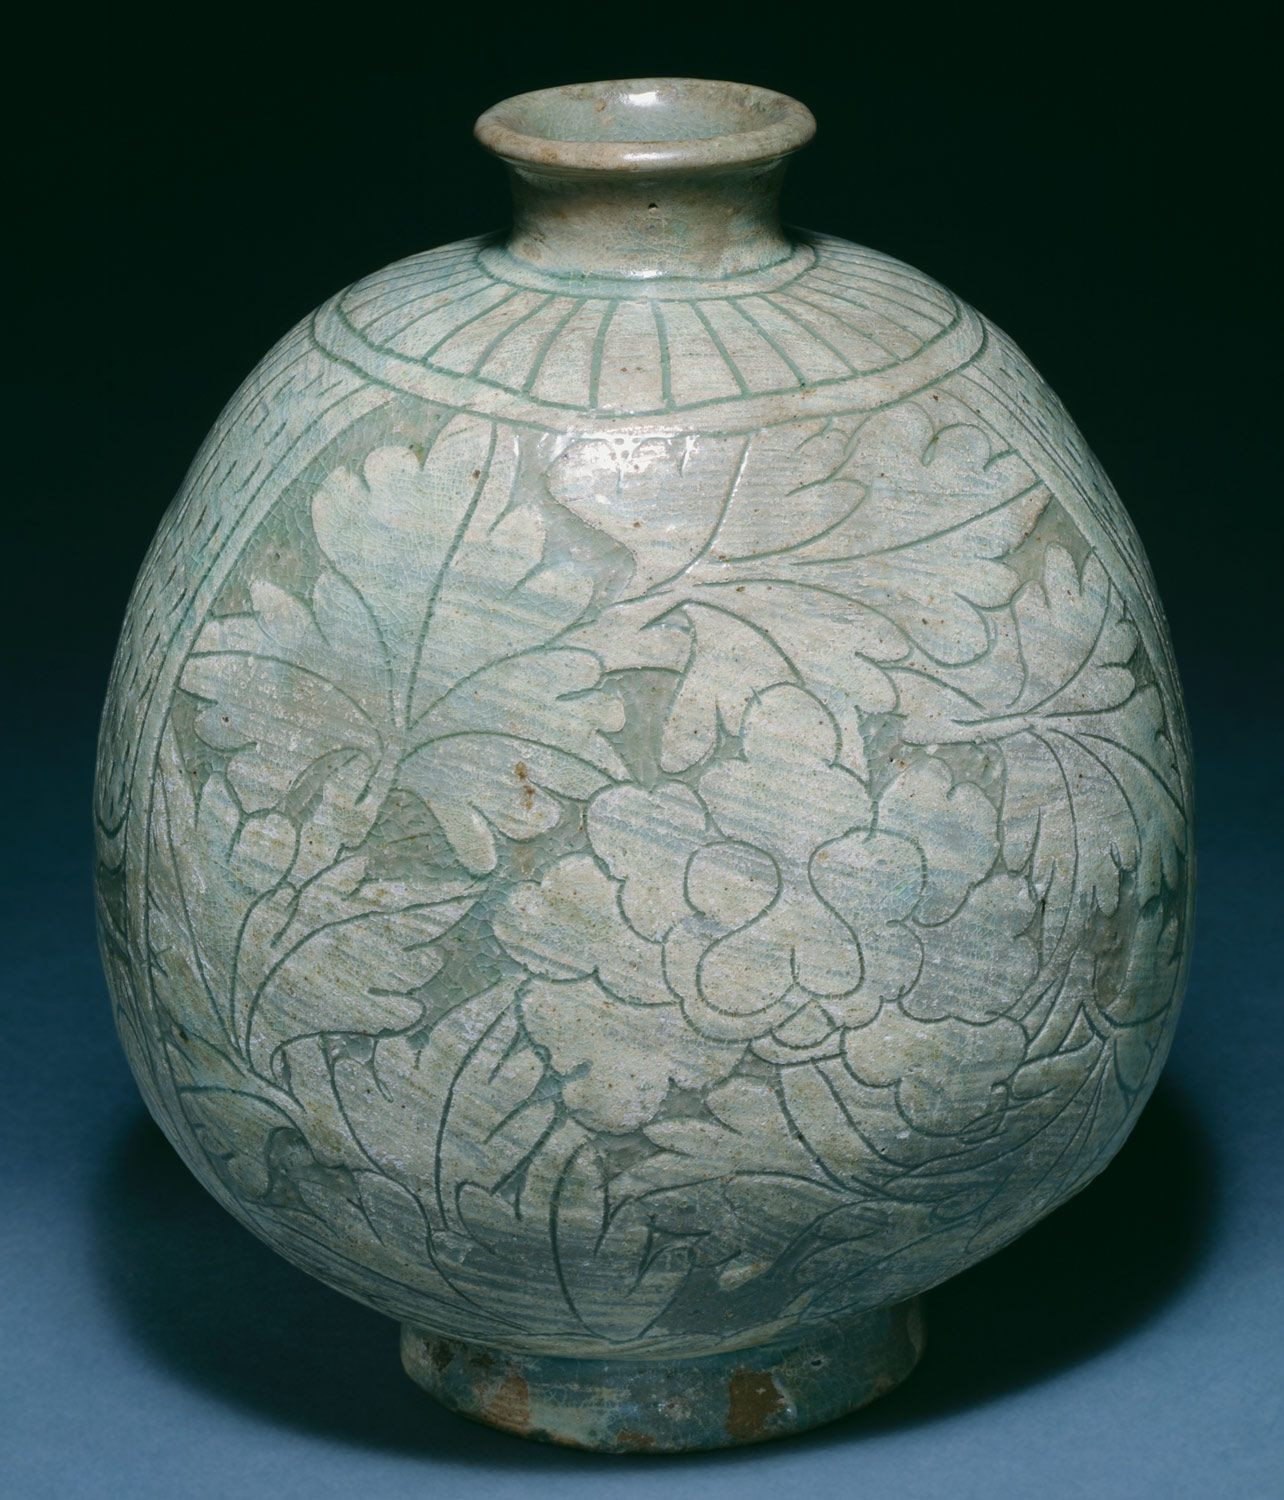 29 Perfect Goryeo Celadon Vase 2024 free download goryeo celadon vase of korean bongjeongware met museum mishima and sgrafitto decorating throughout pottery